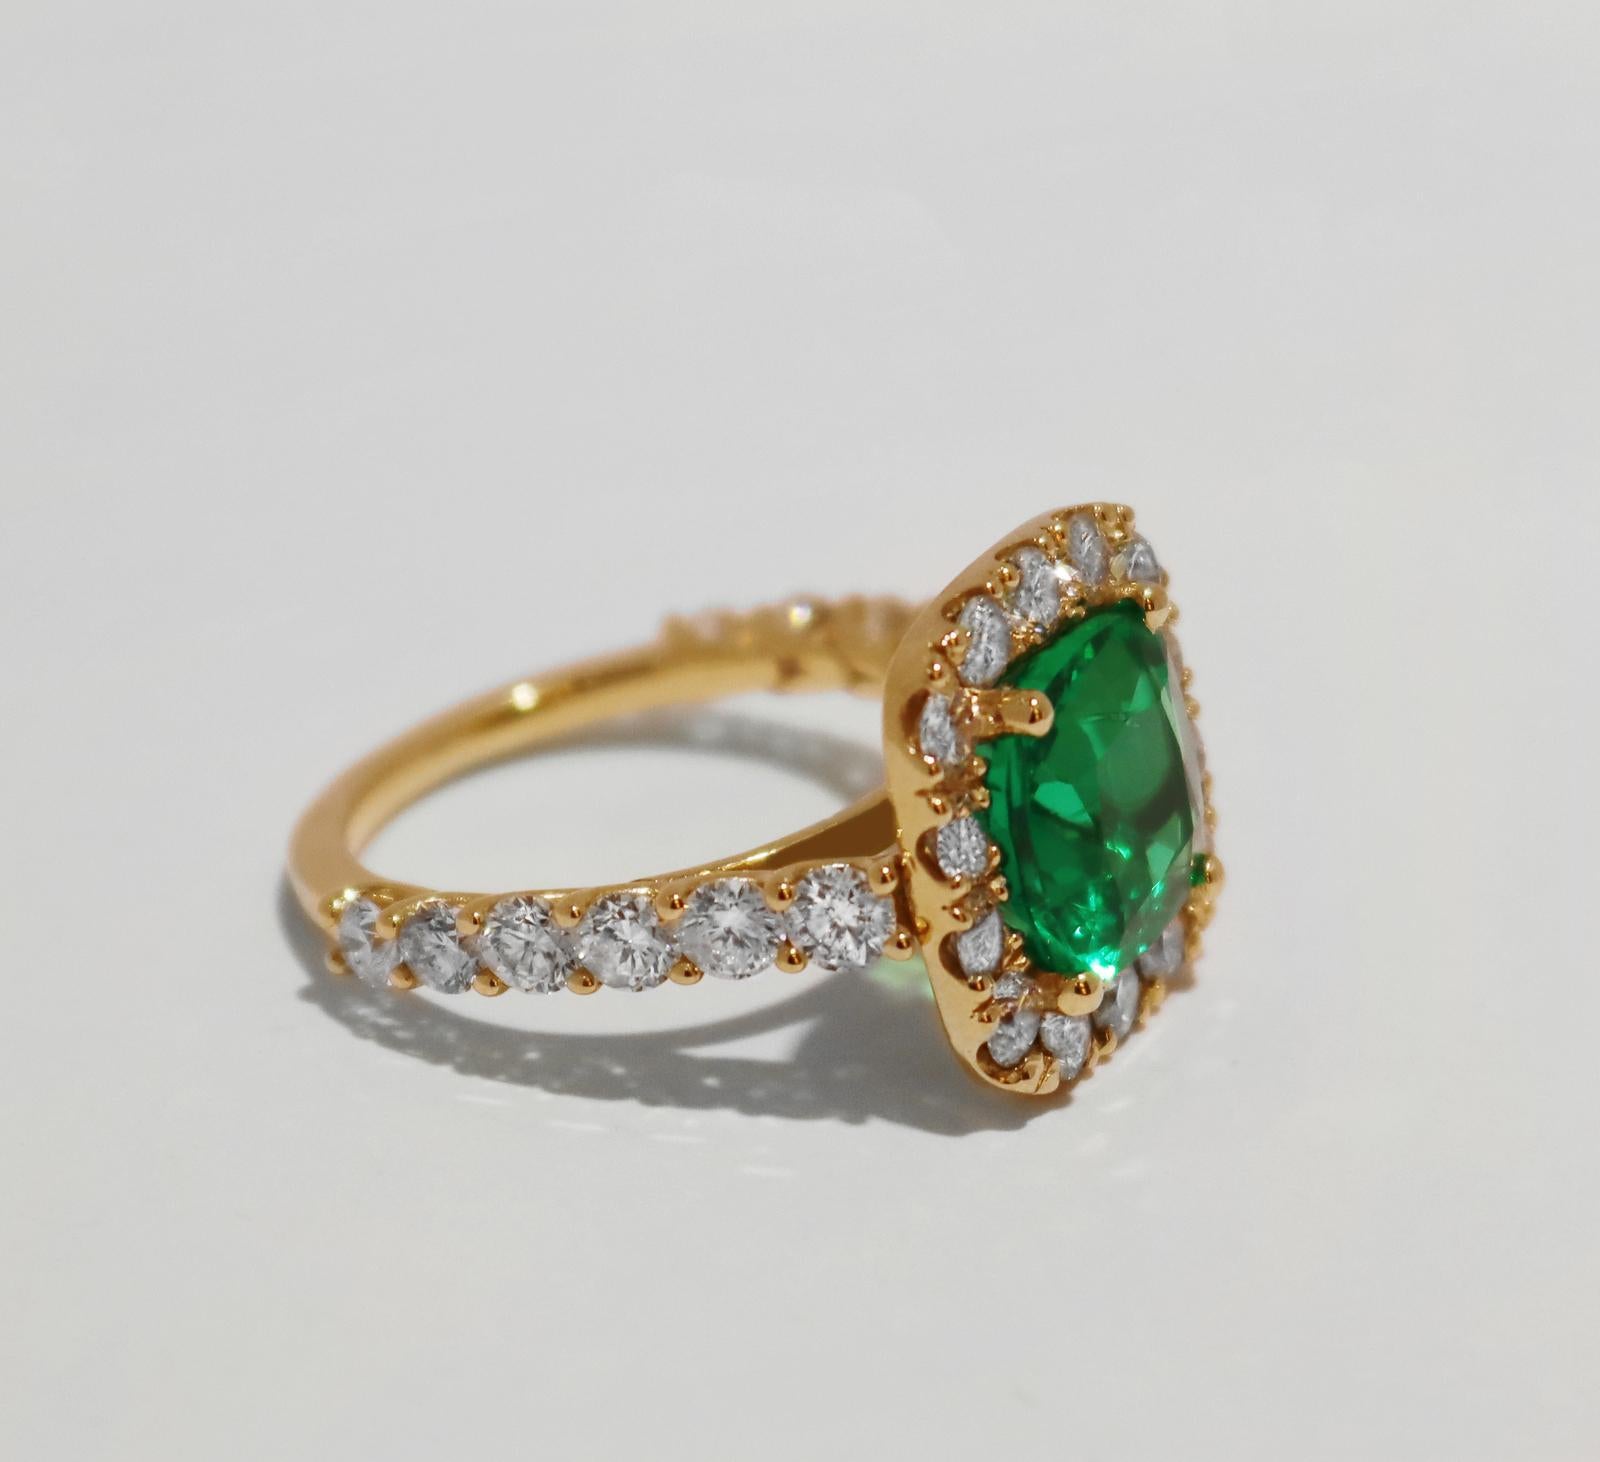 GREEN EMERALD RING WITH DIAMONDS IN YELLOW GOLD

-14k Yellow gold
-Ring size: 8
-Emerald: 5.59ct, 10x10mm
-Diamonds: 2.35ct, VS clarity, E-F color

Retail: $8,500